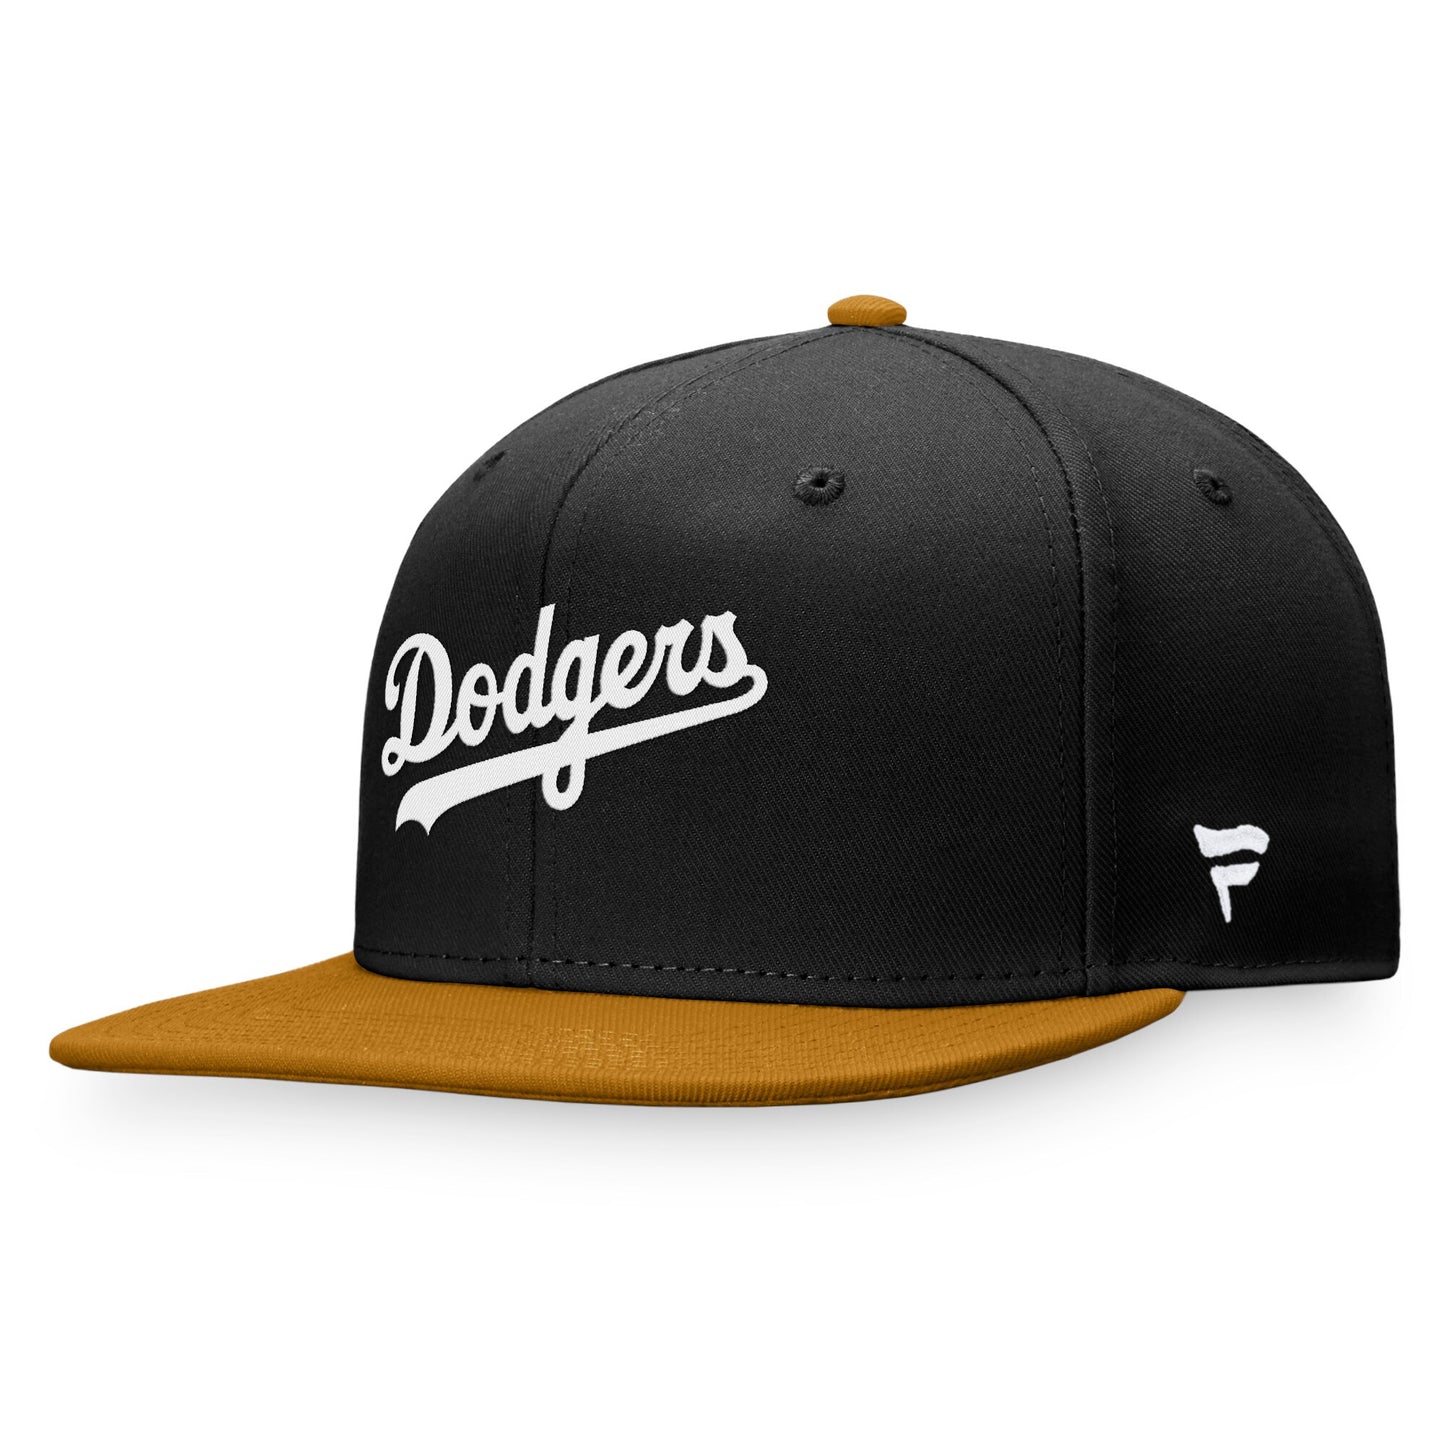 Los Angeles Dodgers Fanatics Branded Fitted Hat - Black/Khaki